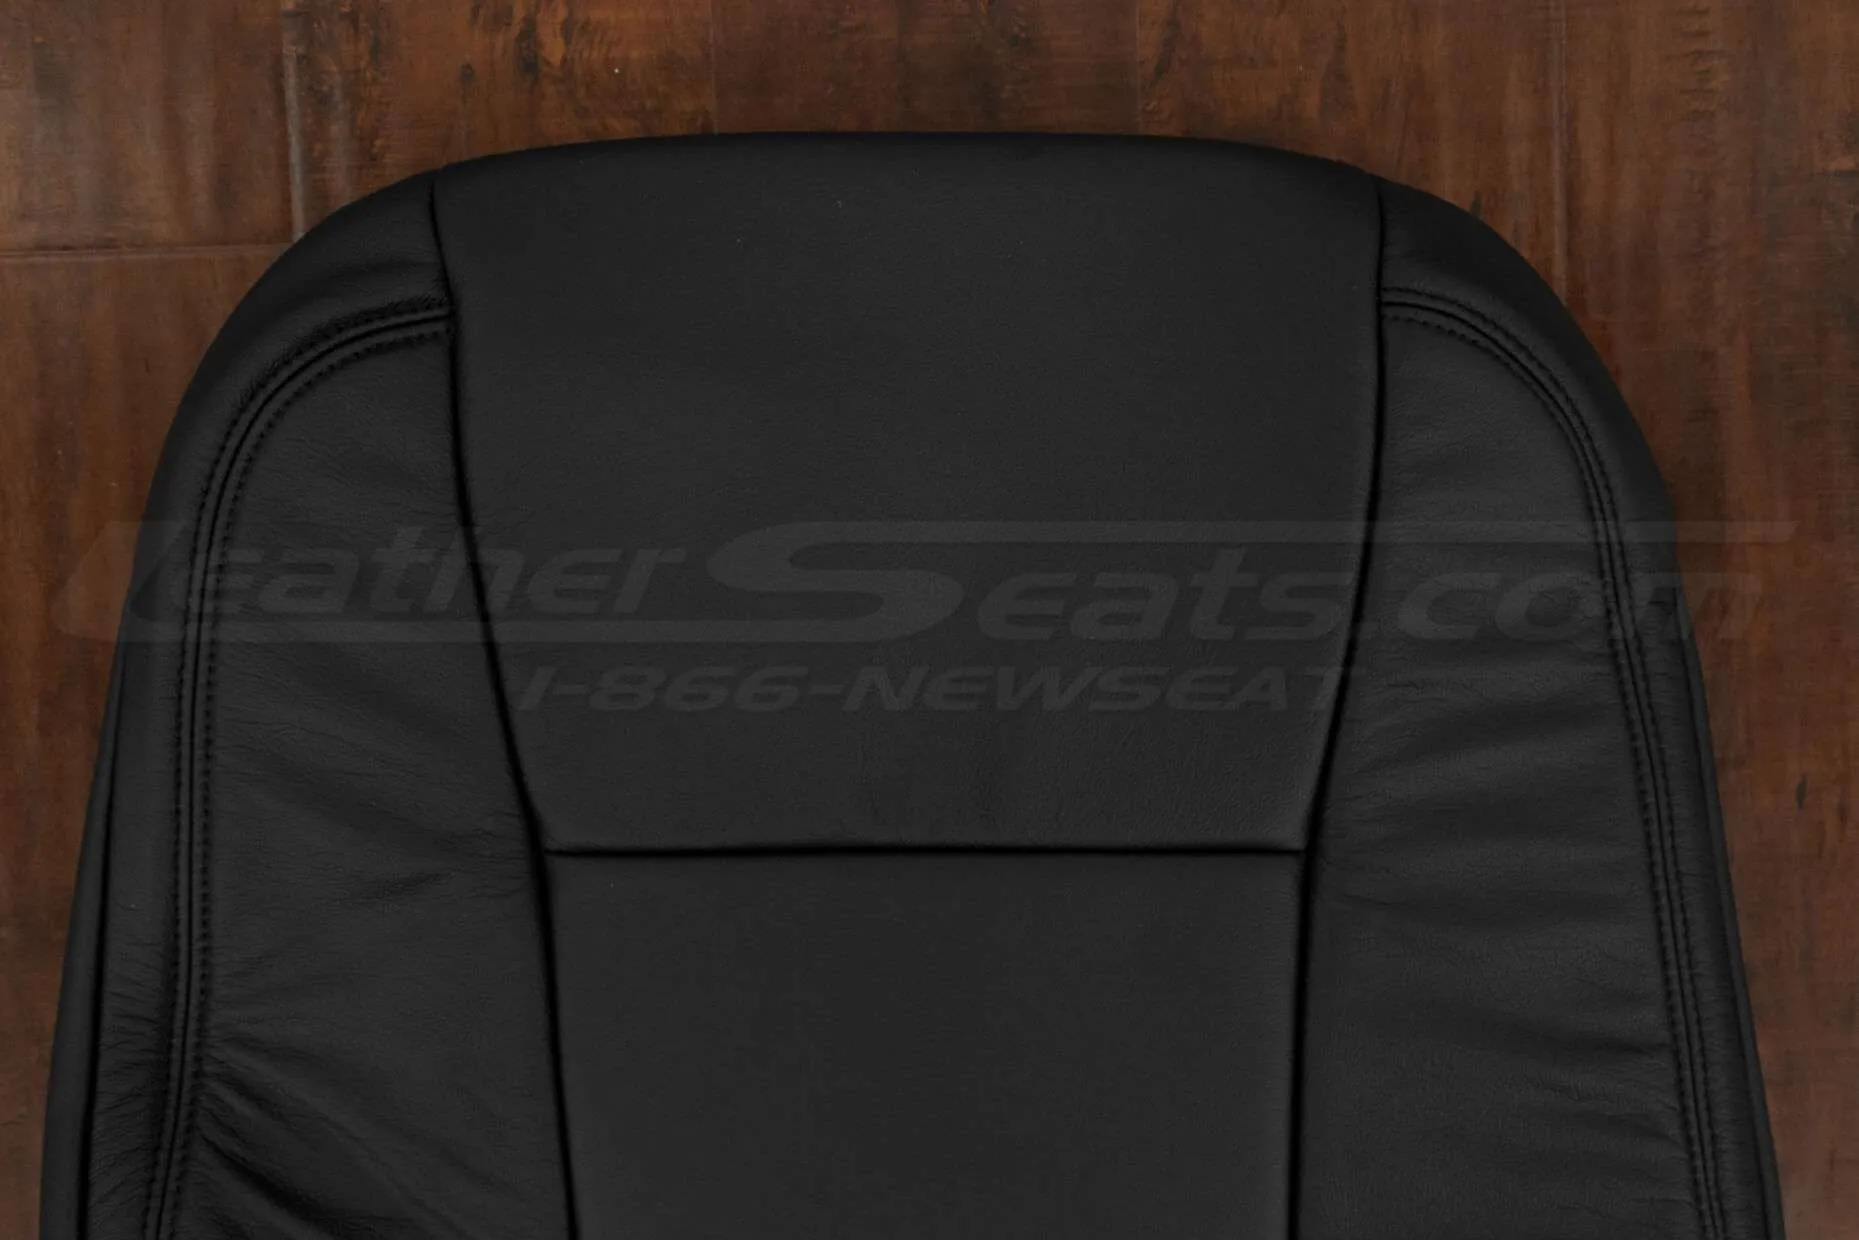 Upper section of Ford F-450 backrest upholstery